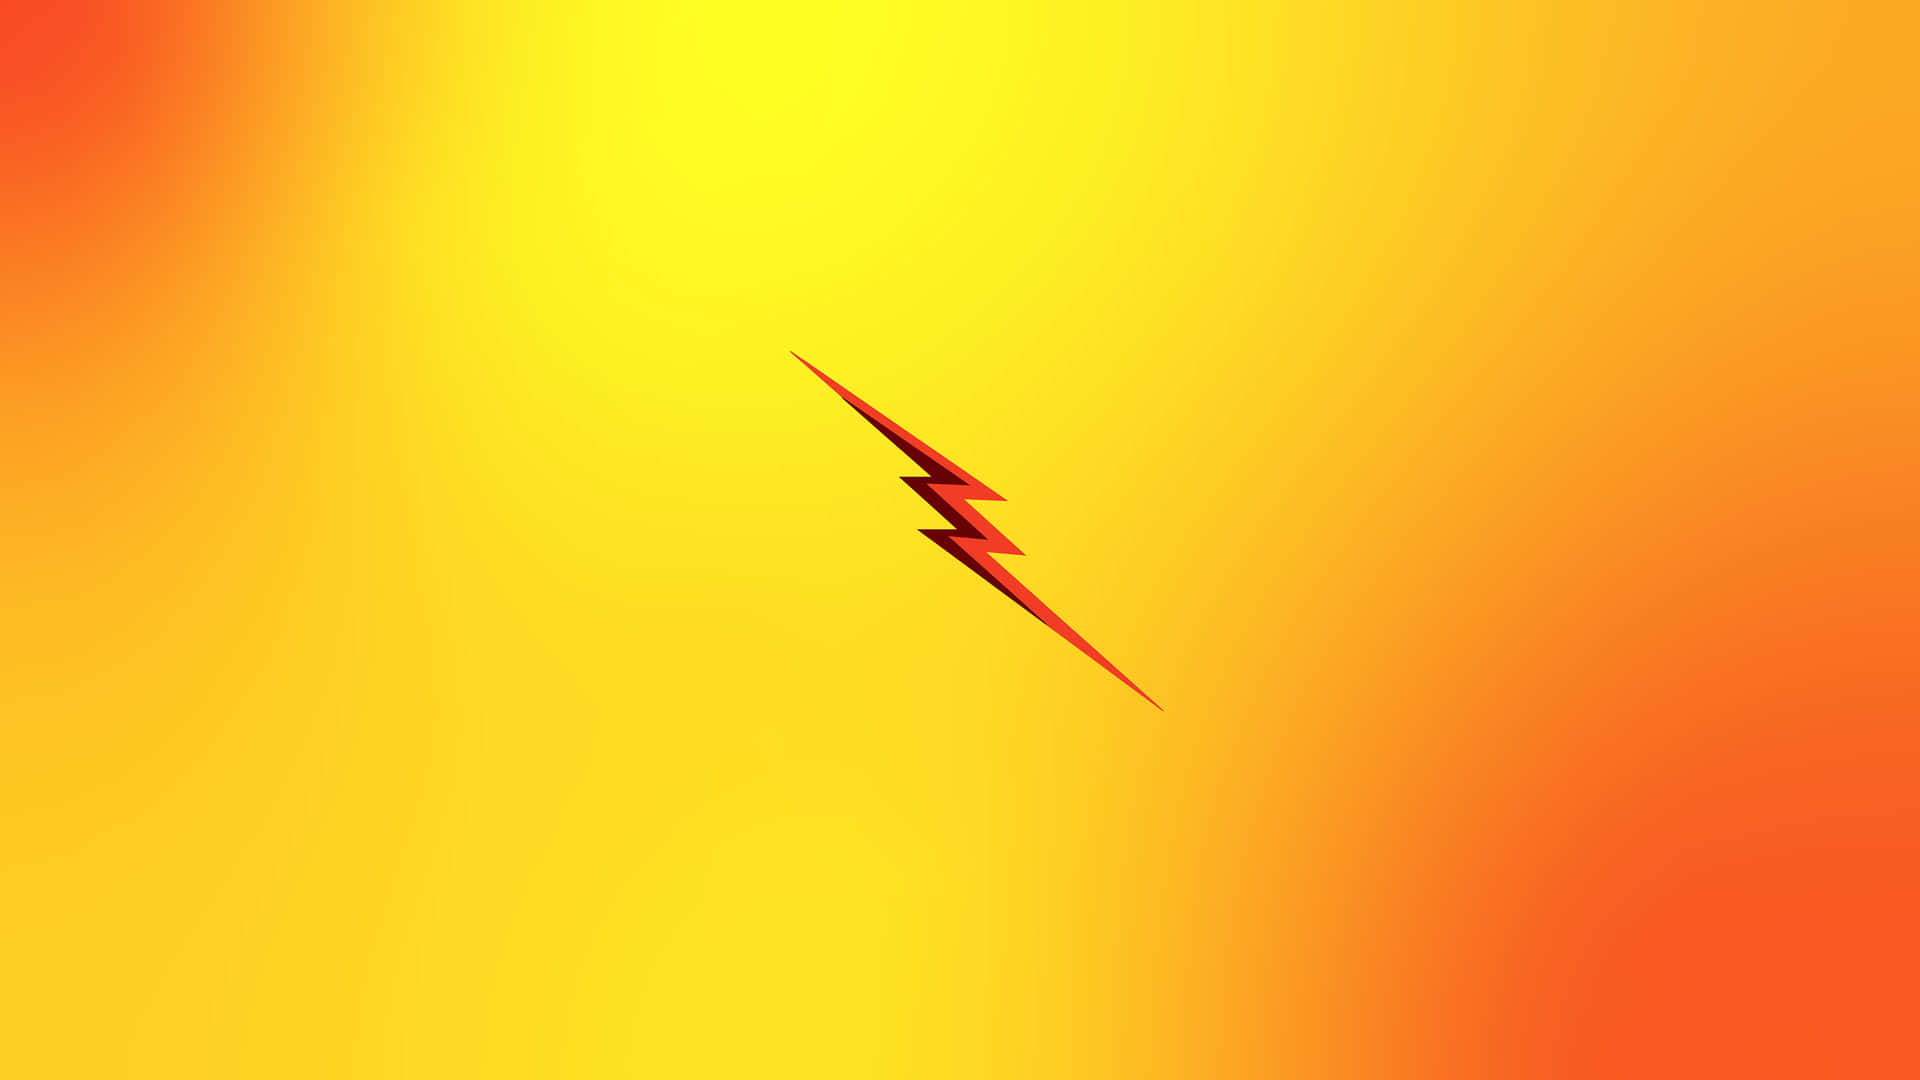 The Flash displaying his lightning speed